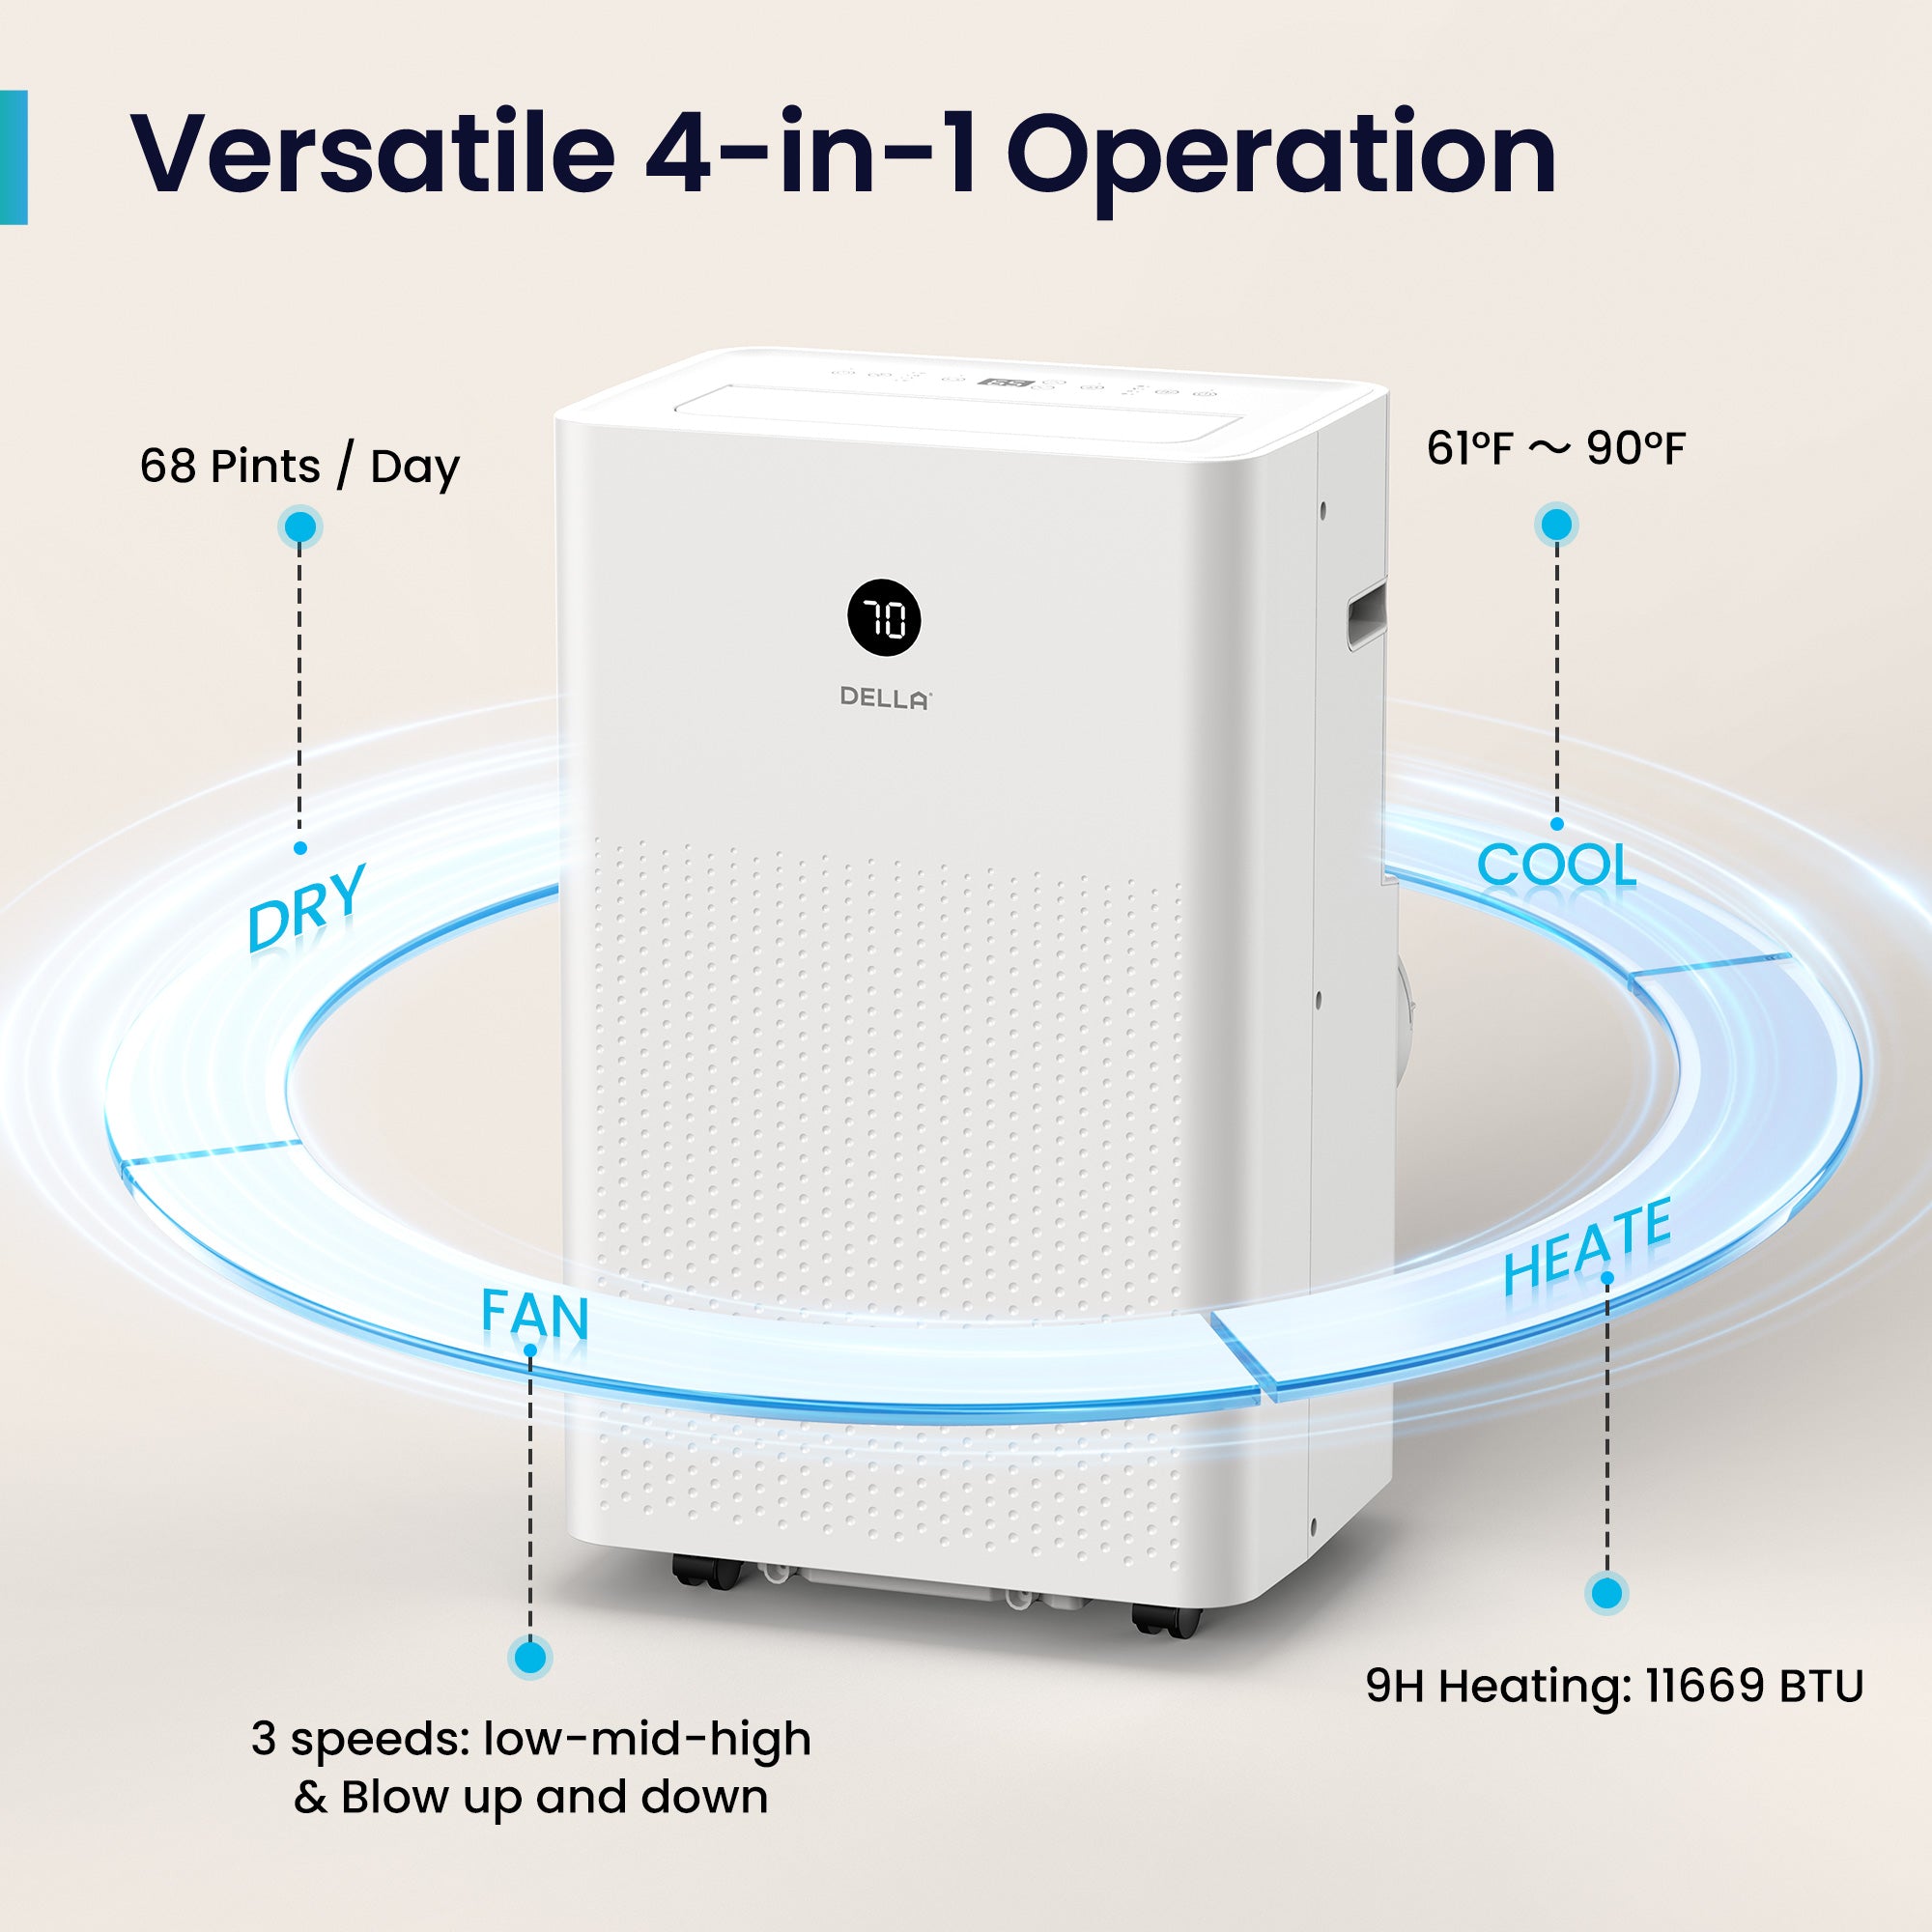 14,000 BTU Portable Air Conditioner with Heat Pump Cools